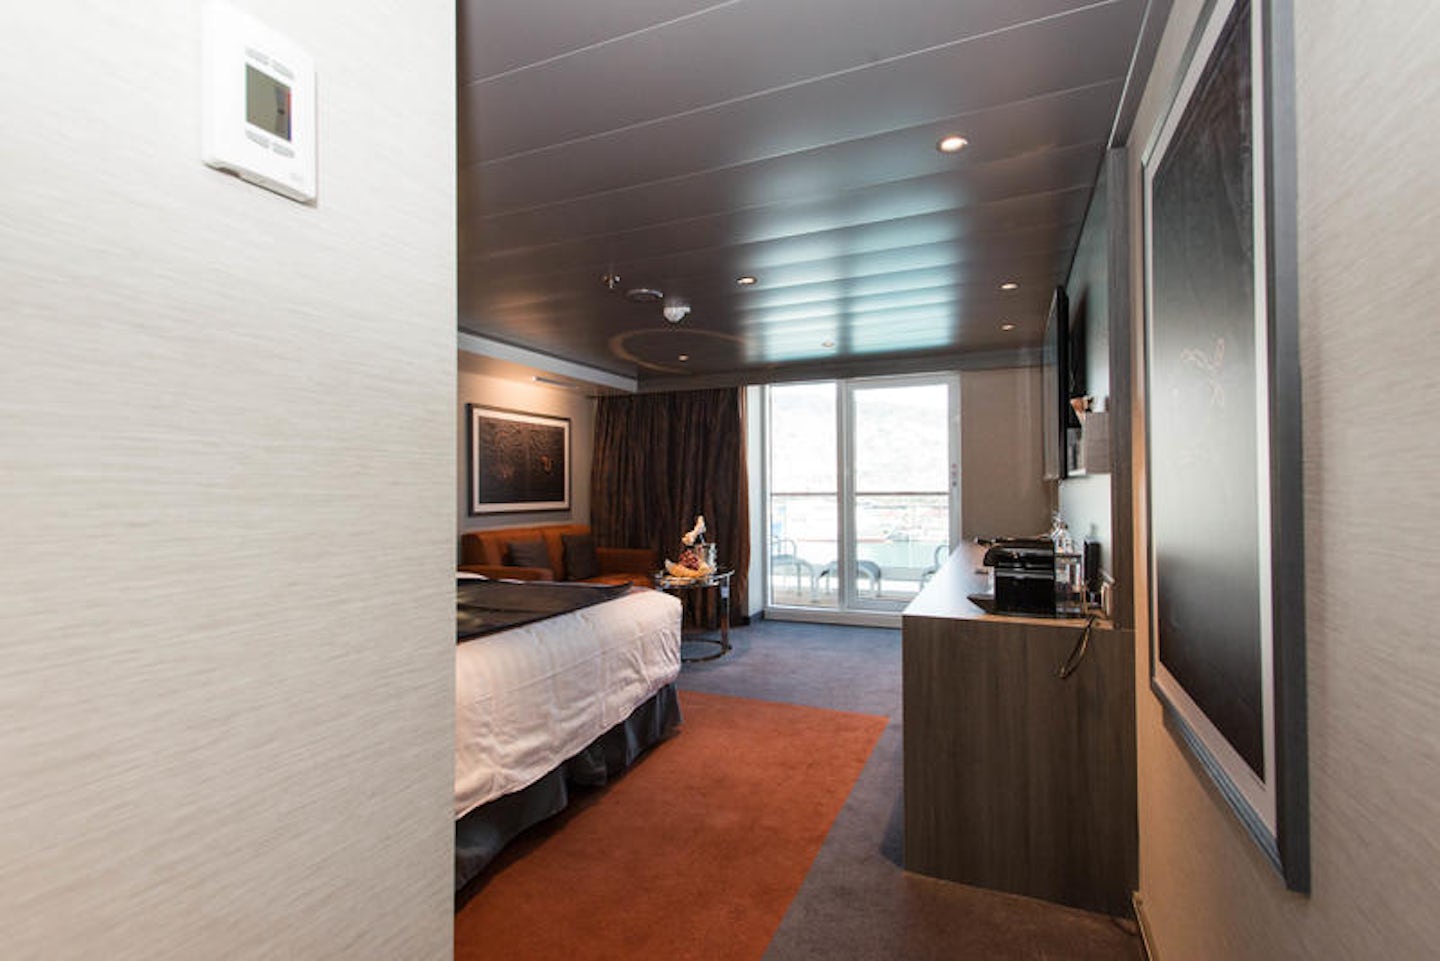 The MSC Yacht Club Deluxe Suite on MSC Meraviglia